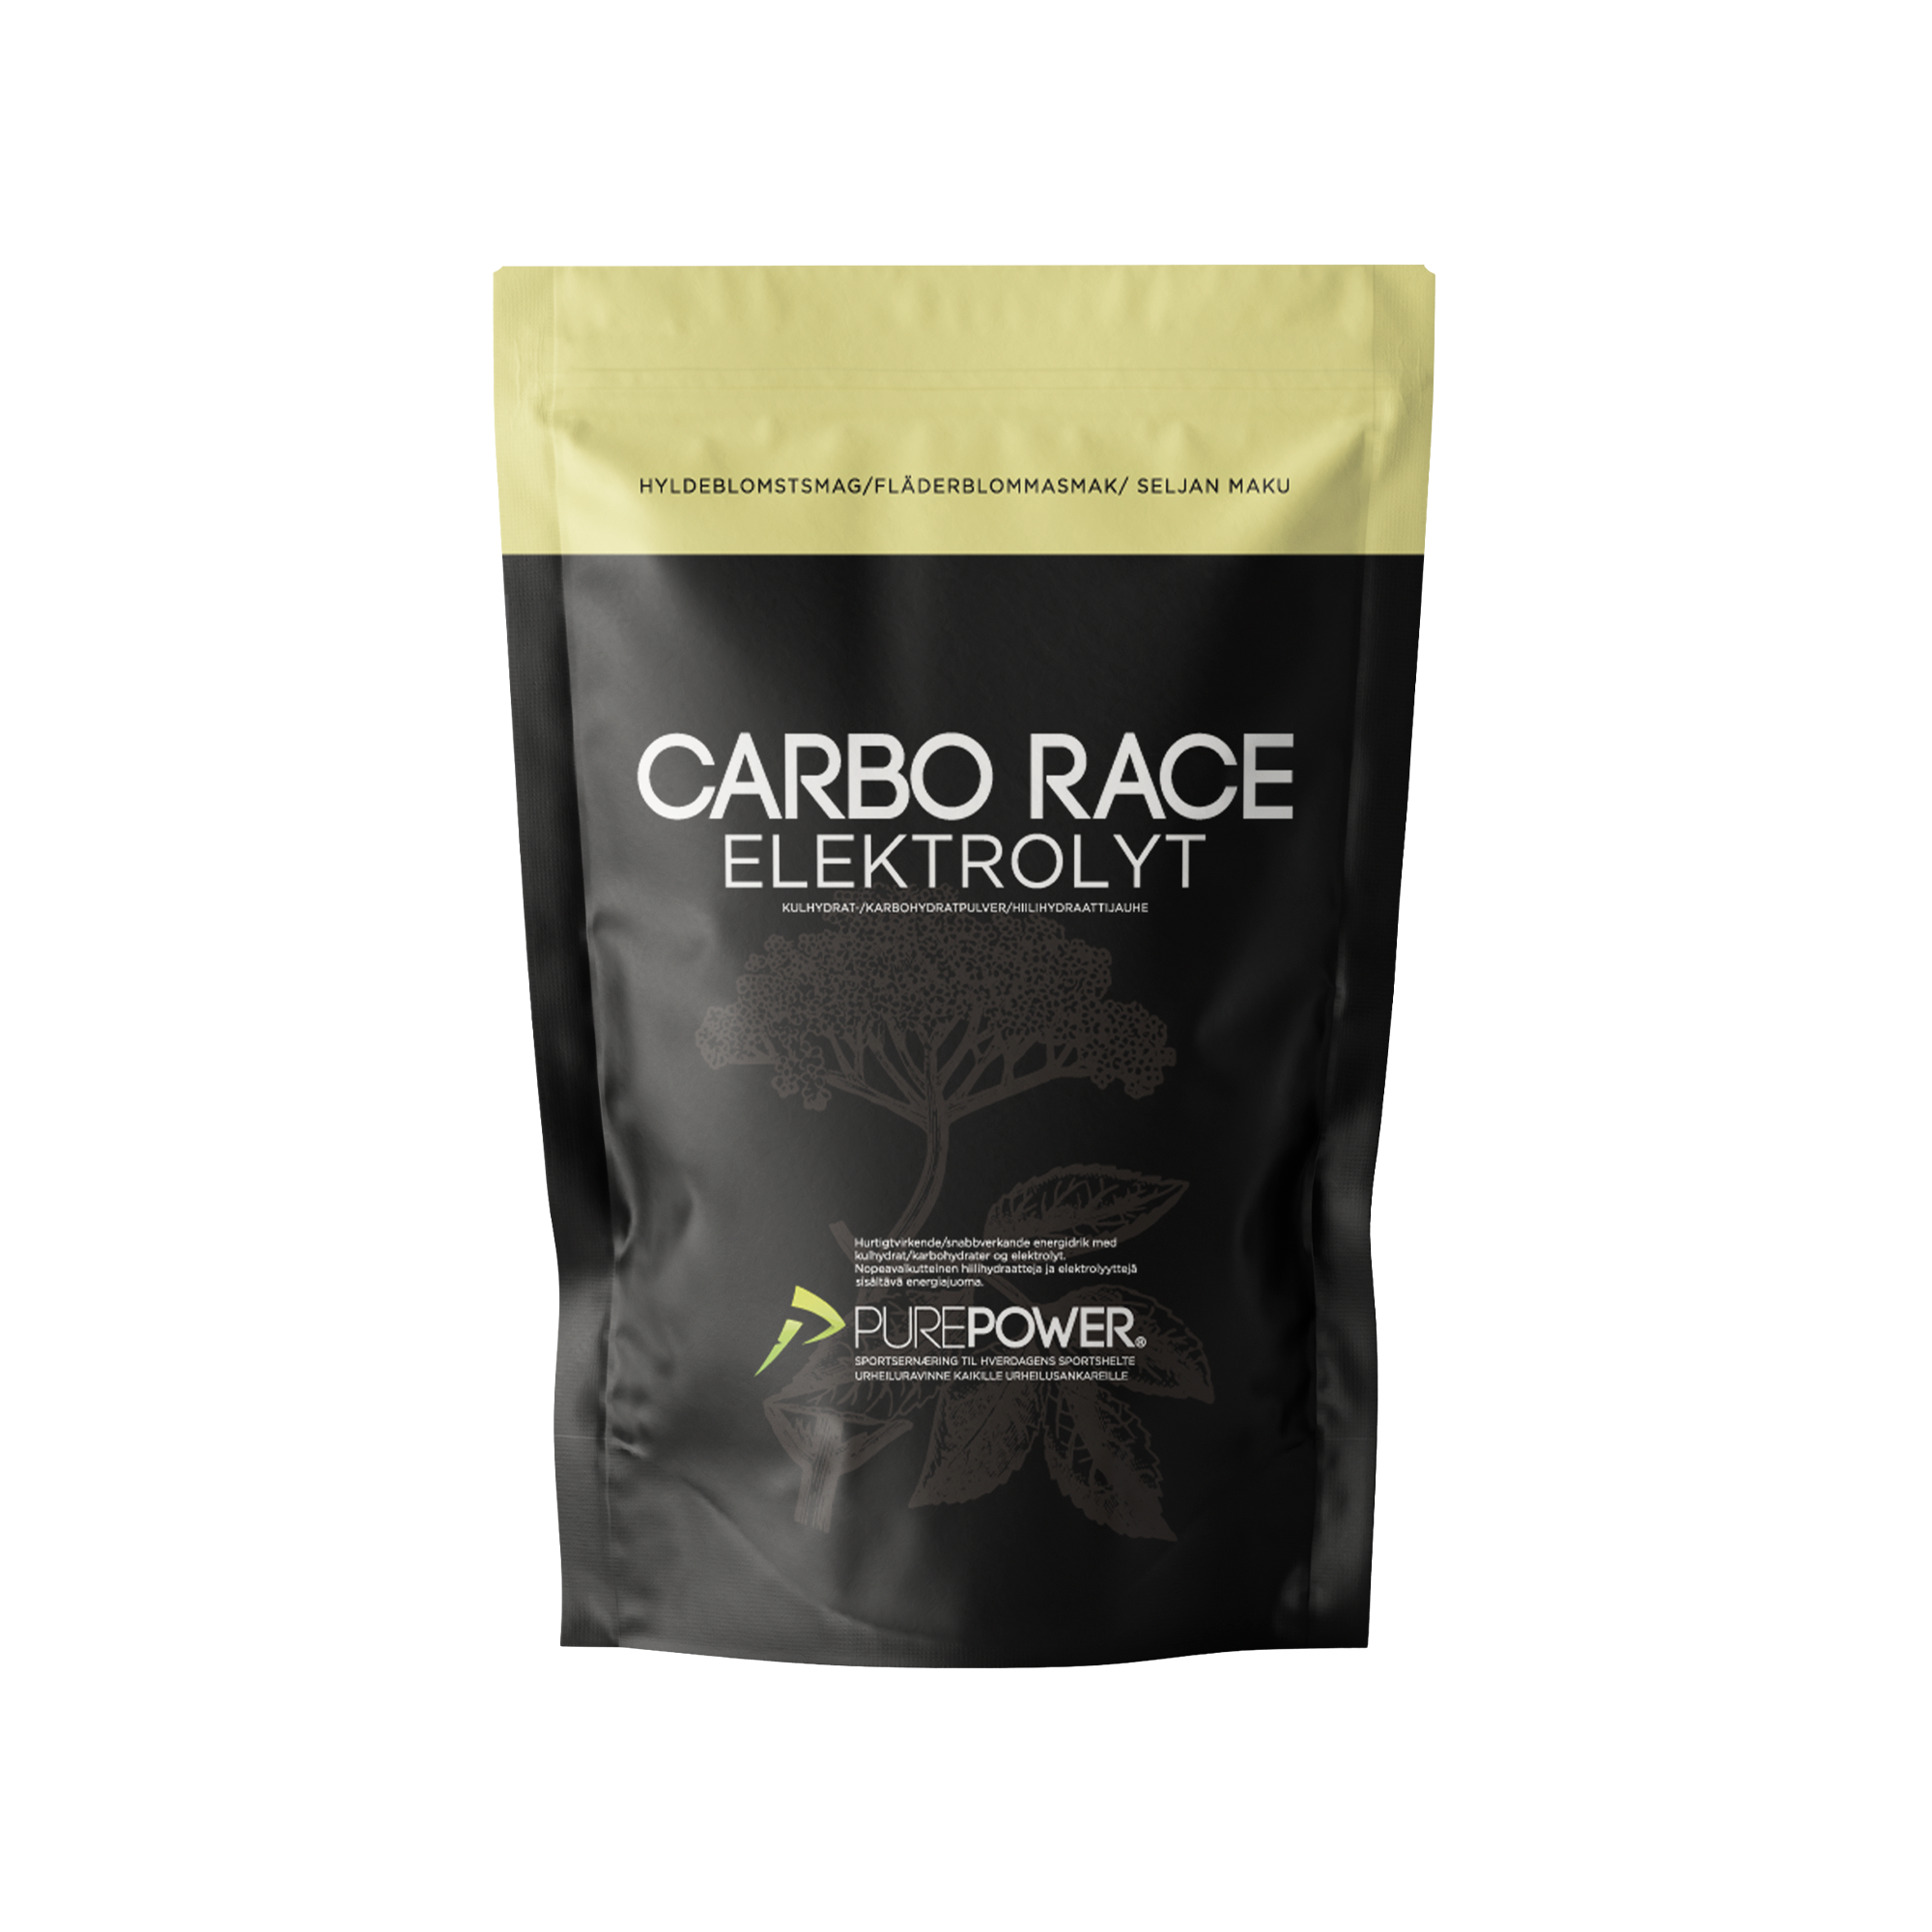 5: PurePower Carbo Race Elektrolyt hyldeblomst 1 kg